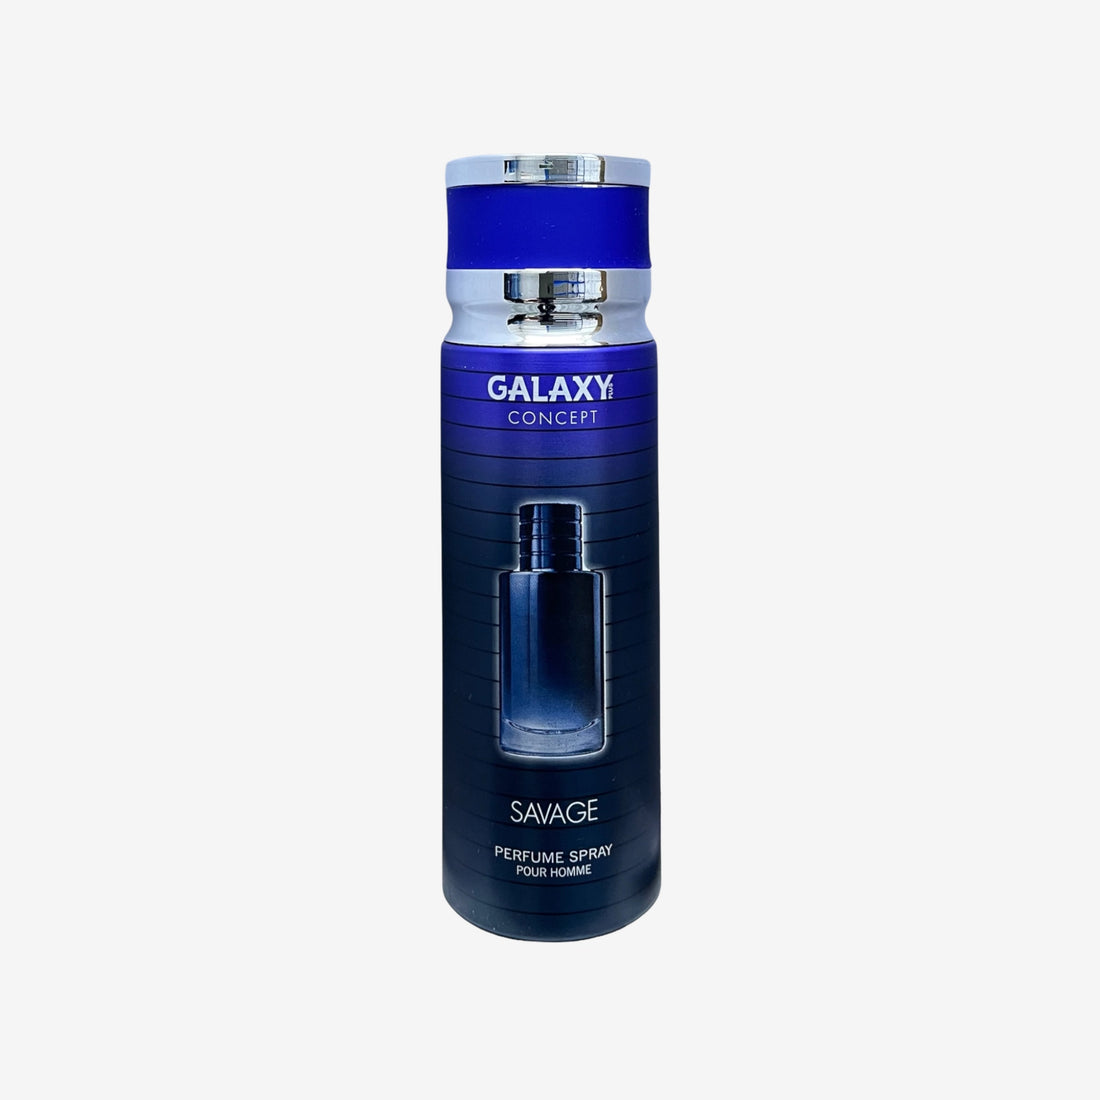 Galaxy Plus Concept SAVAGE Perfume Body Spray - Inspired By Sauvage